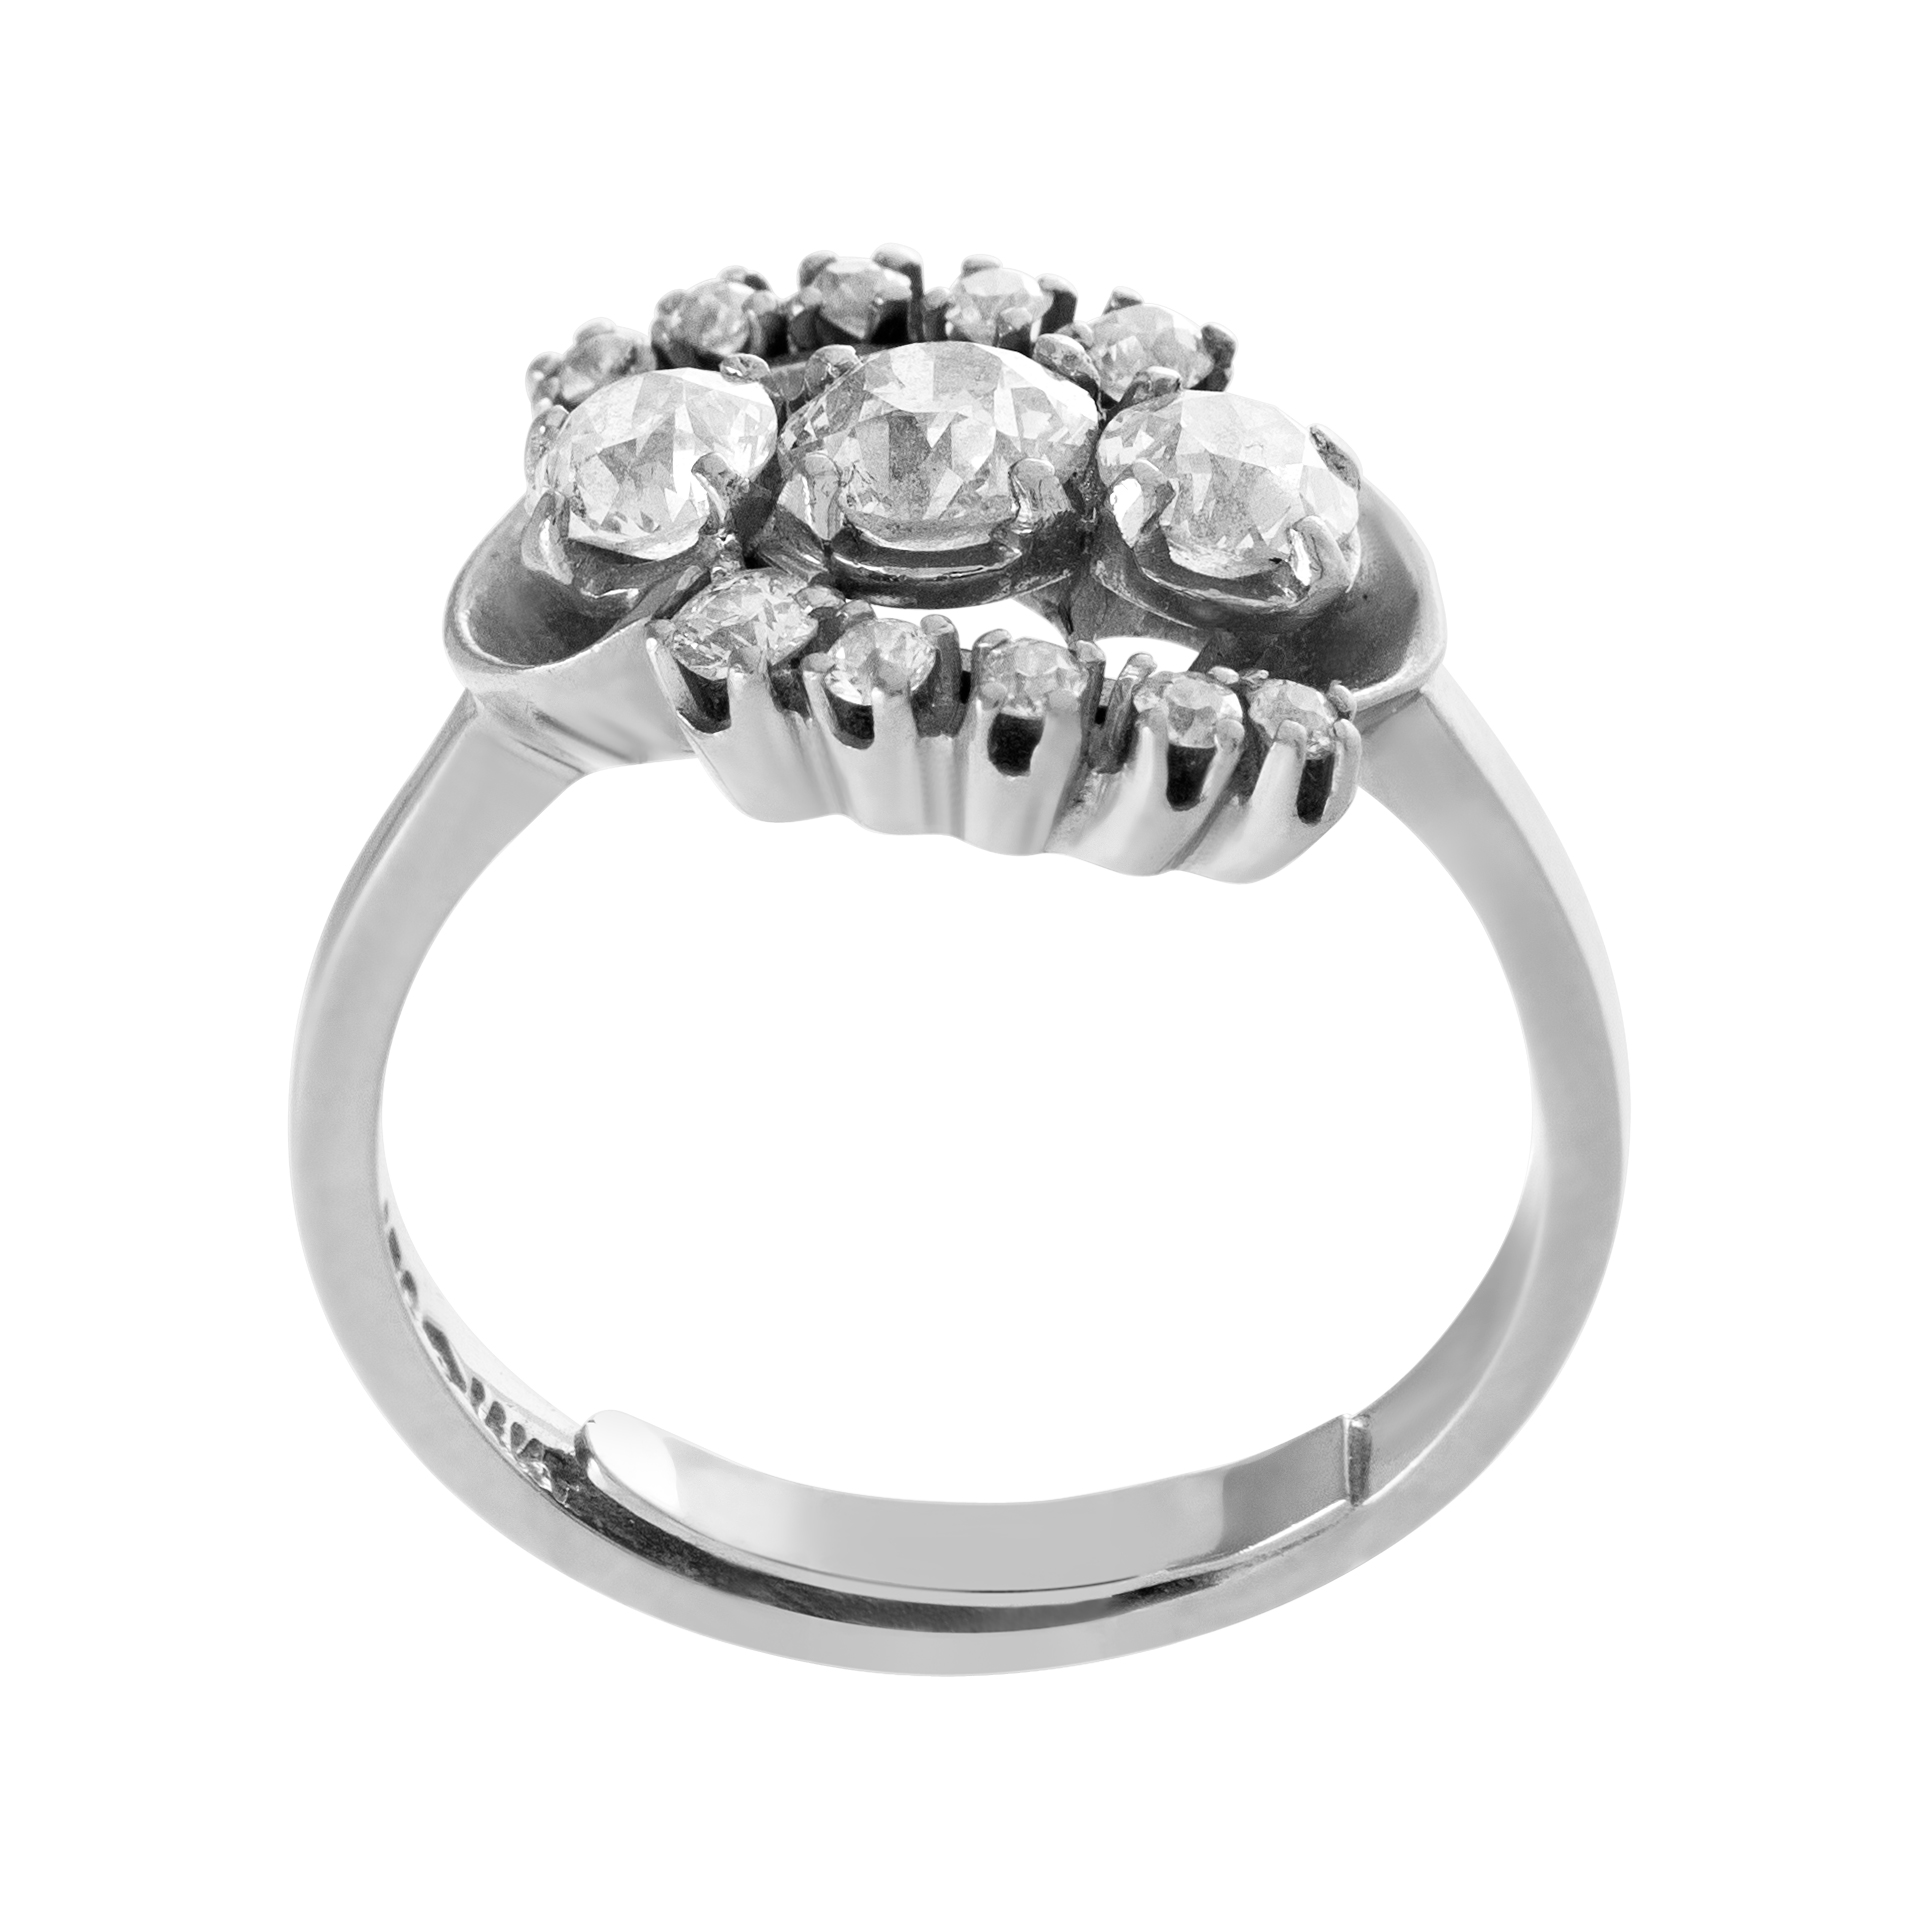 "Past, Present, Future" 3 European cut diamond ring set in 14K white gold